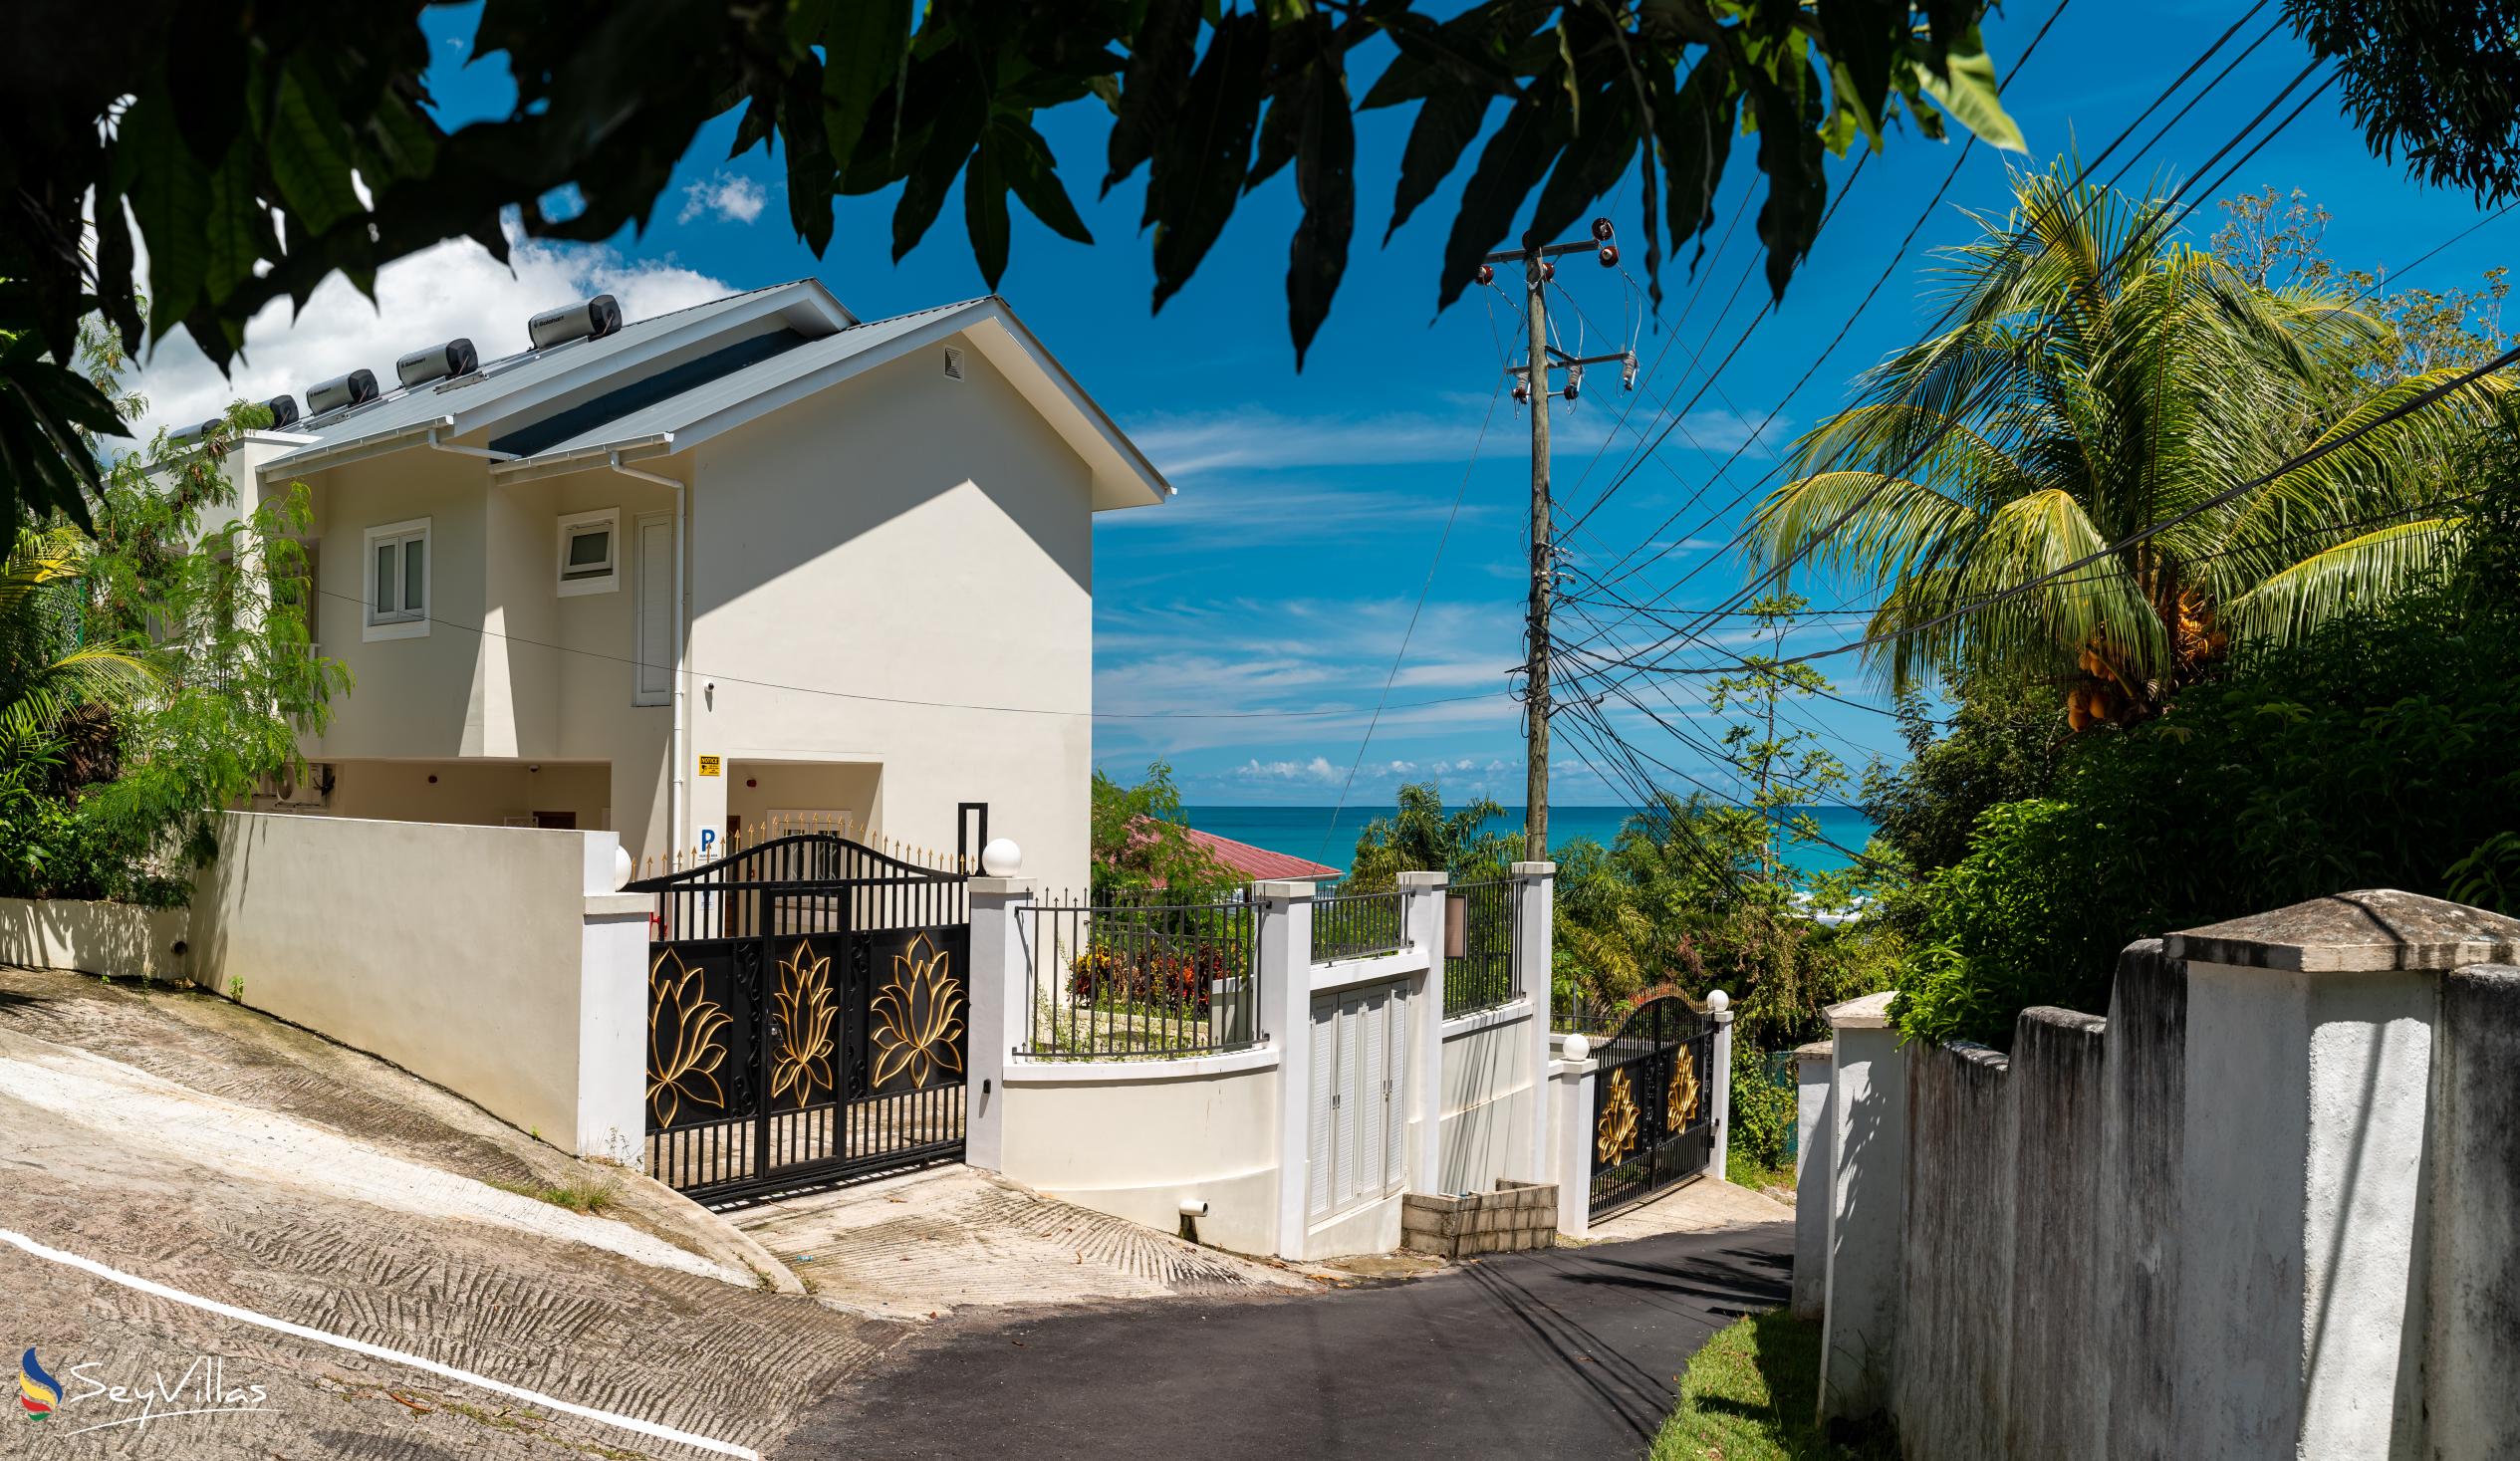 Foto 5: Crystal Shores Self Catering Apartments - Aussenbereich - Mahé (Seychellen)